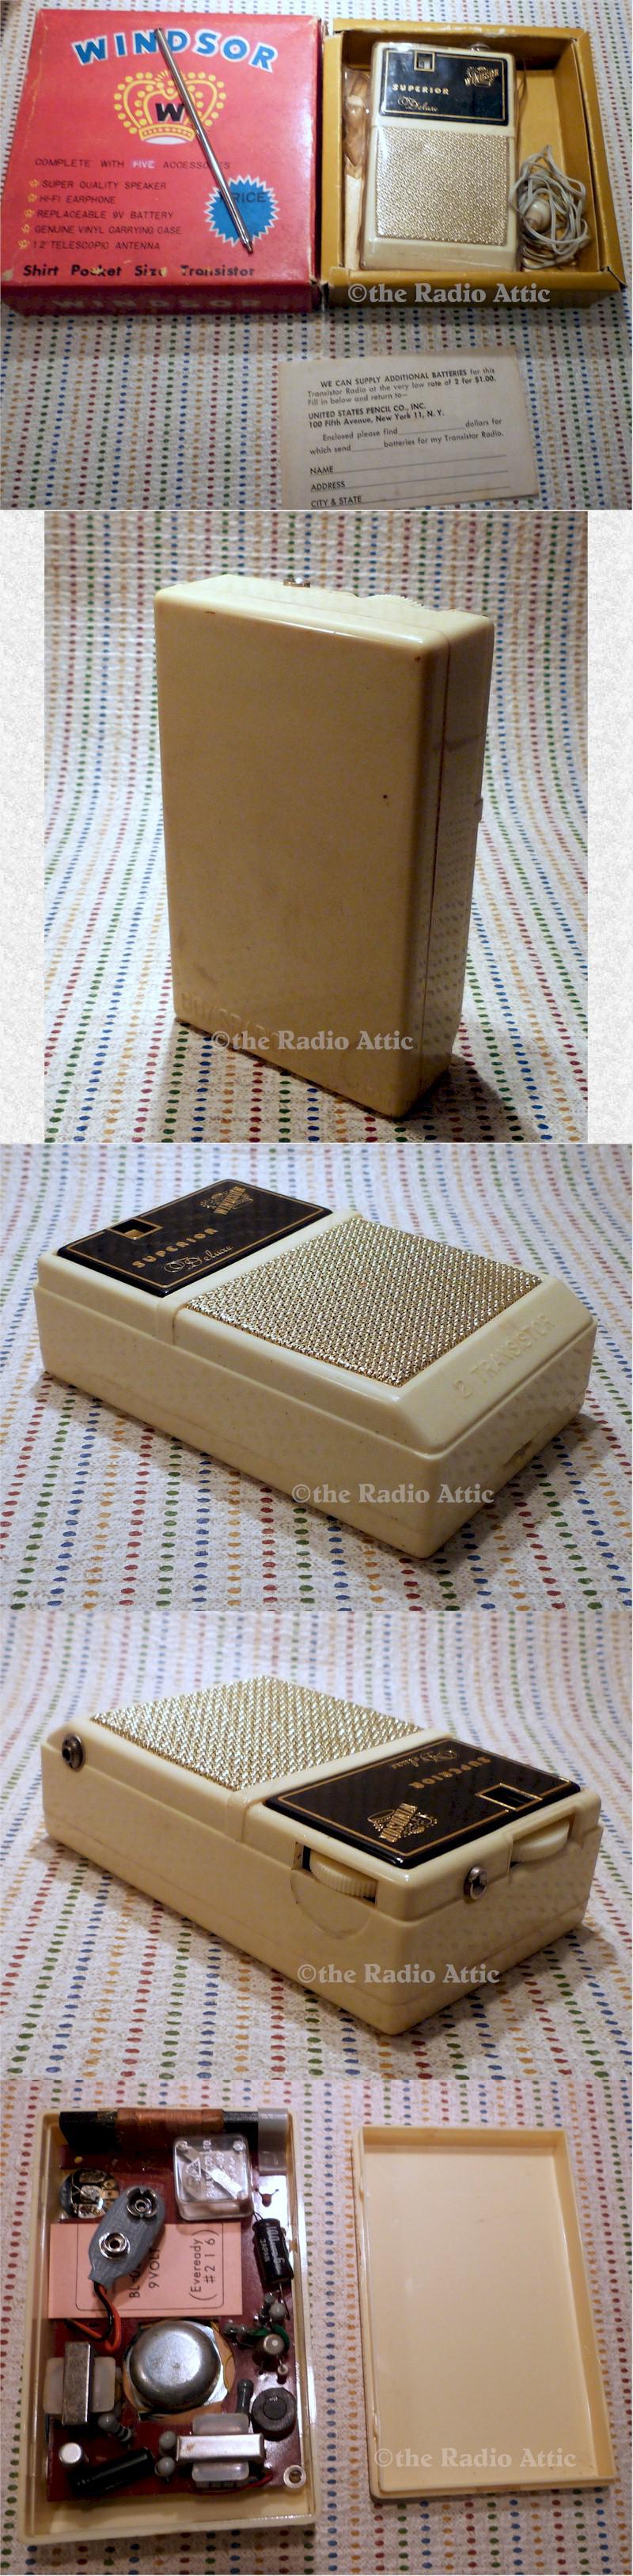 Windsor 15066 Boy's Radio